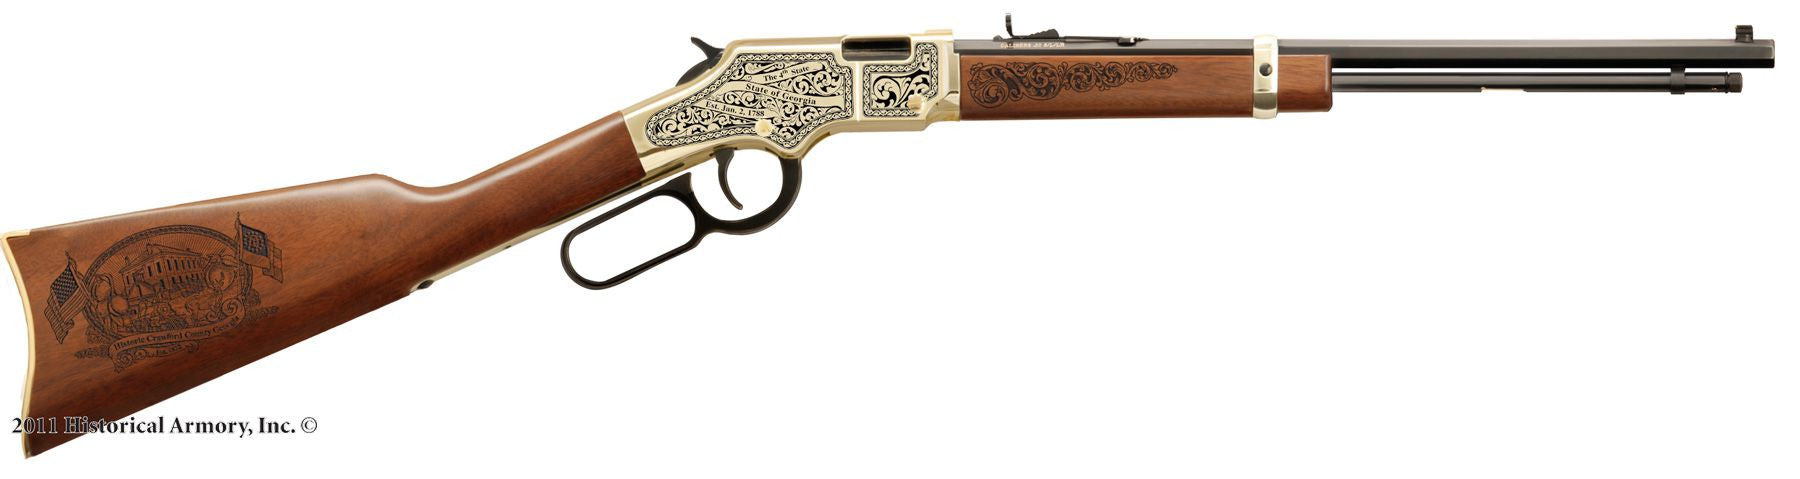 Crawford county georgia engraved rifle H004